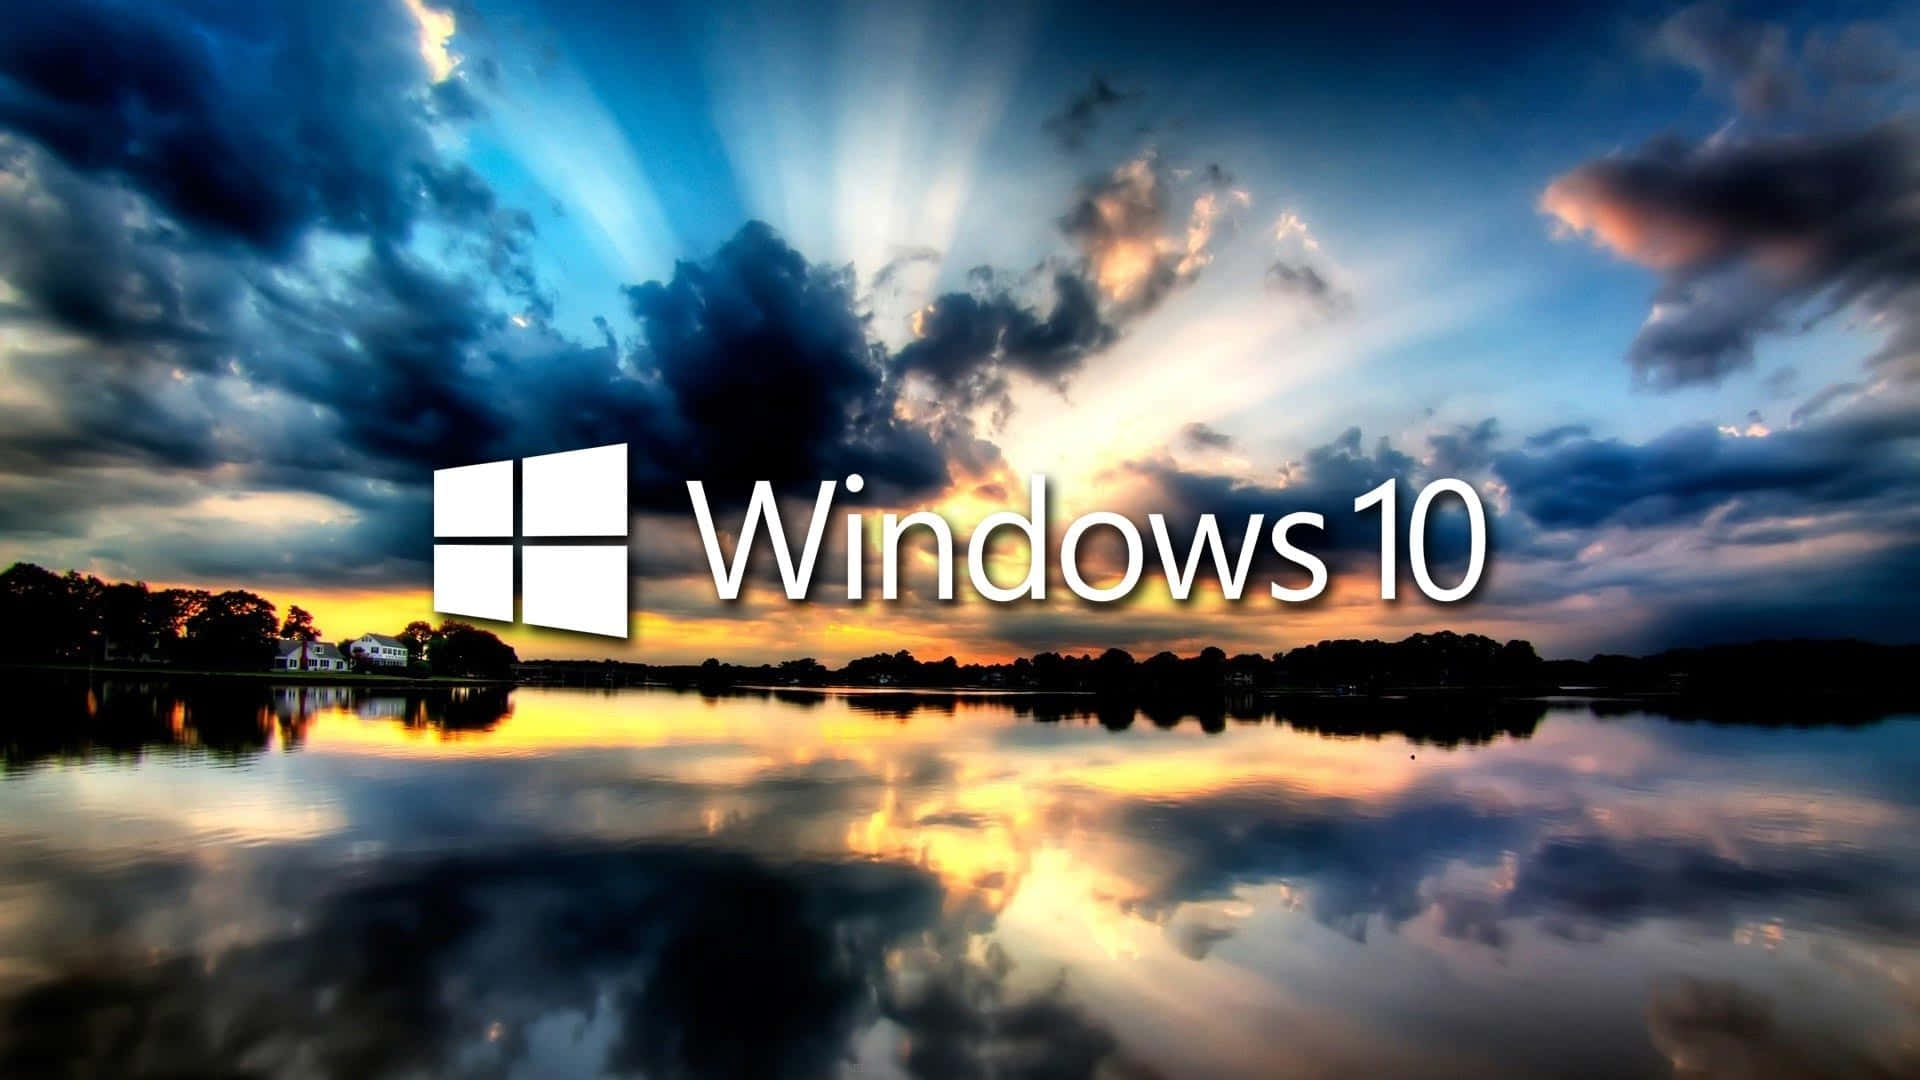 Blivorganiseret Og Øg Produktiviteten Med Windows 10.